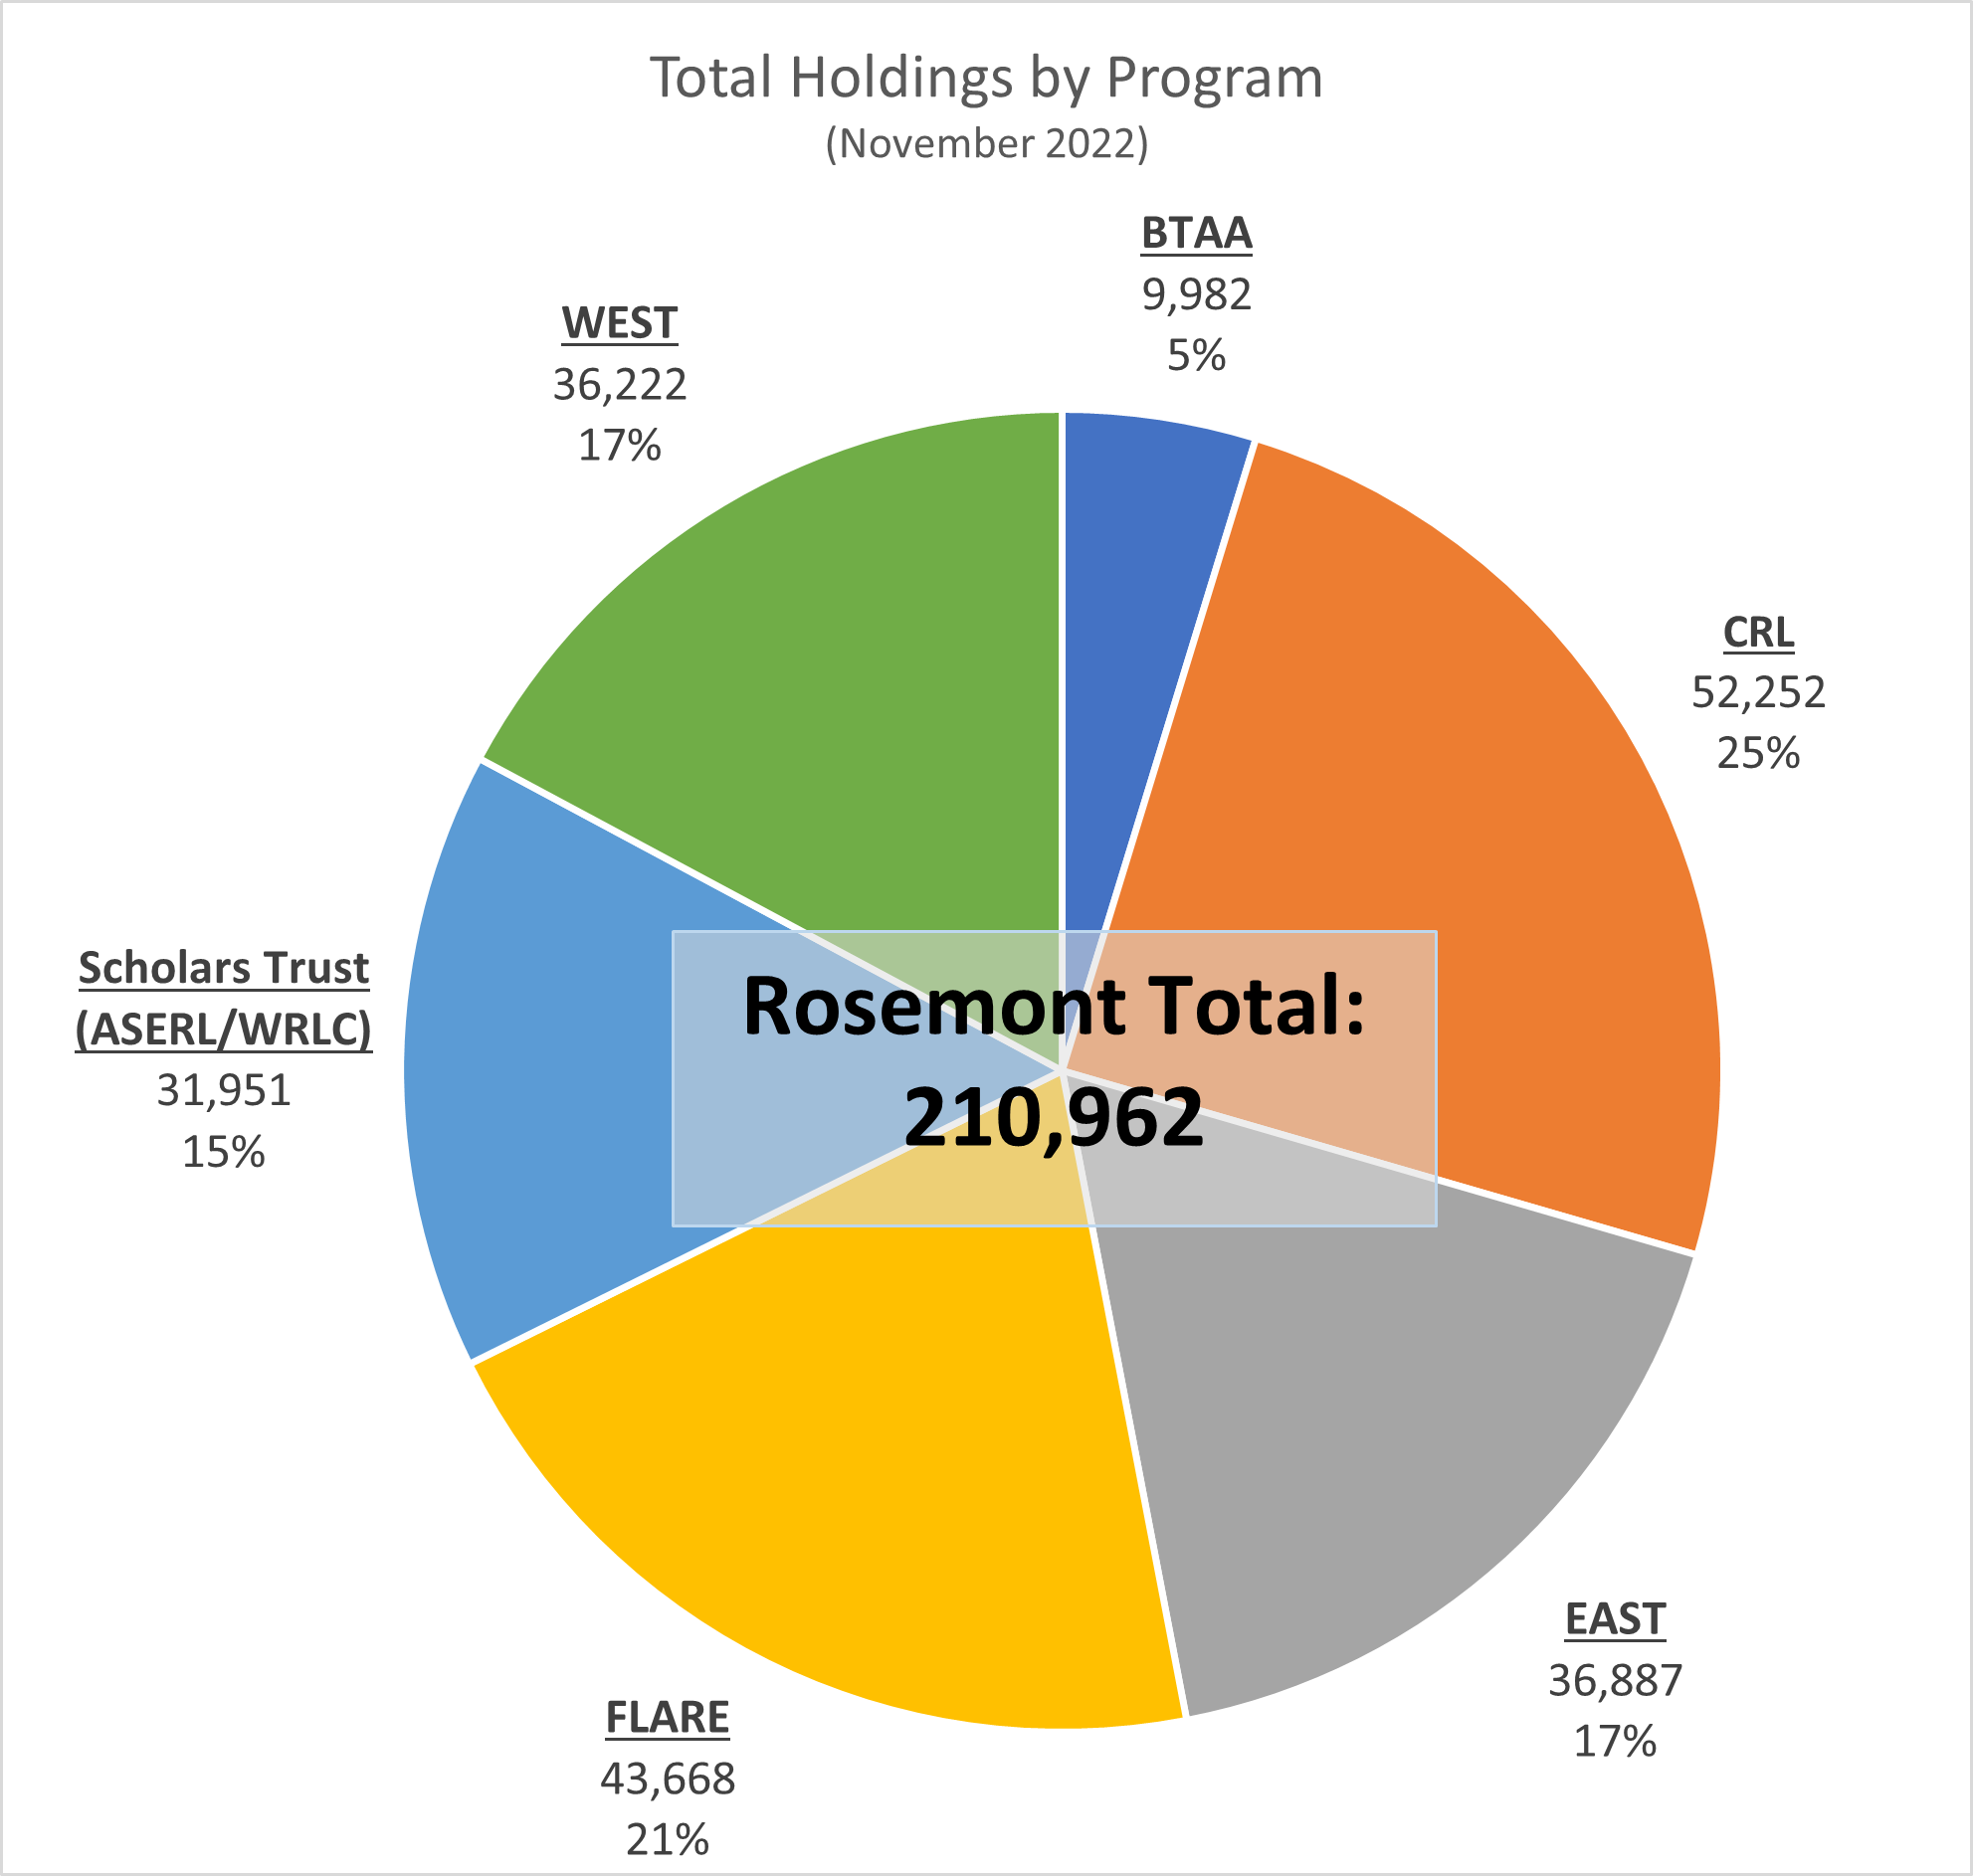 Rosemont Statistics Pie Chart 178,357 total titles